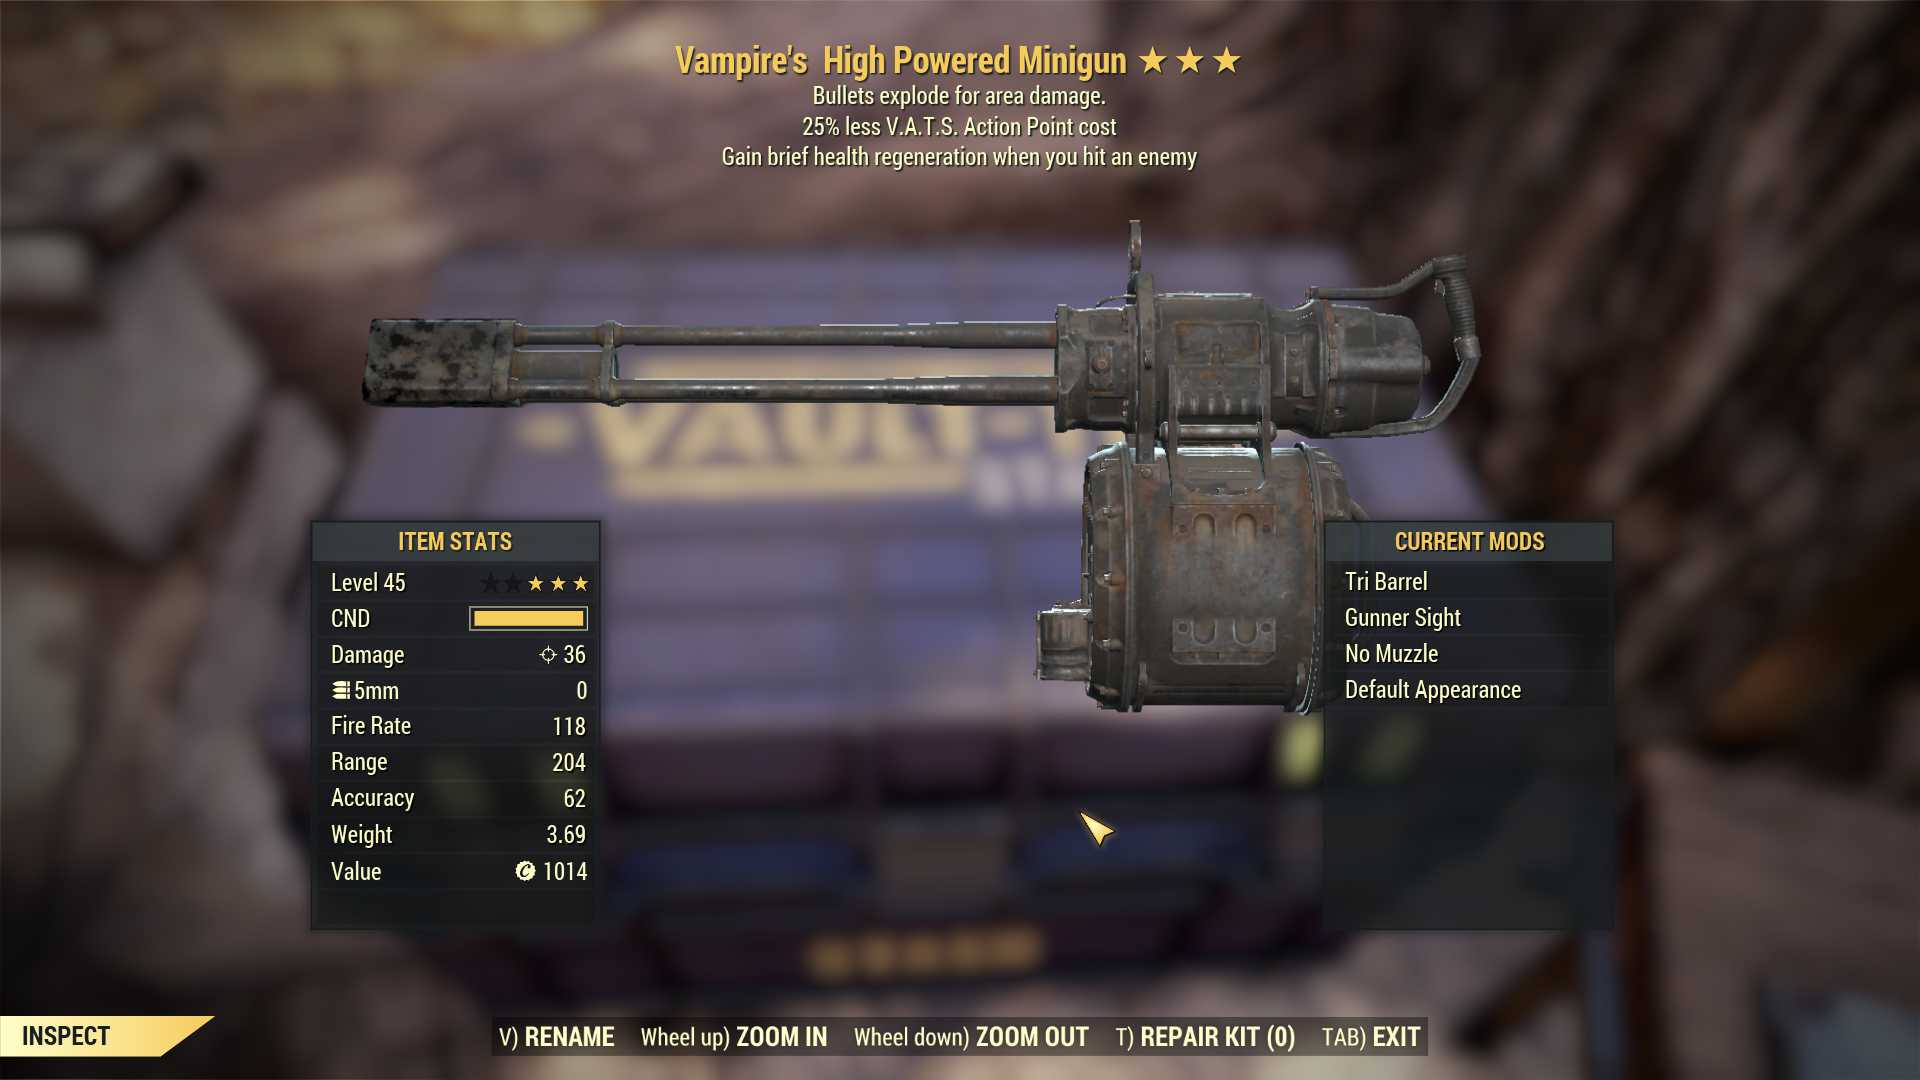 Vampire's Explosive Minigun (25% less VATS AP cost)